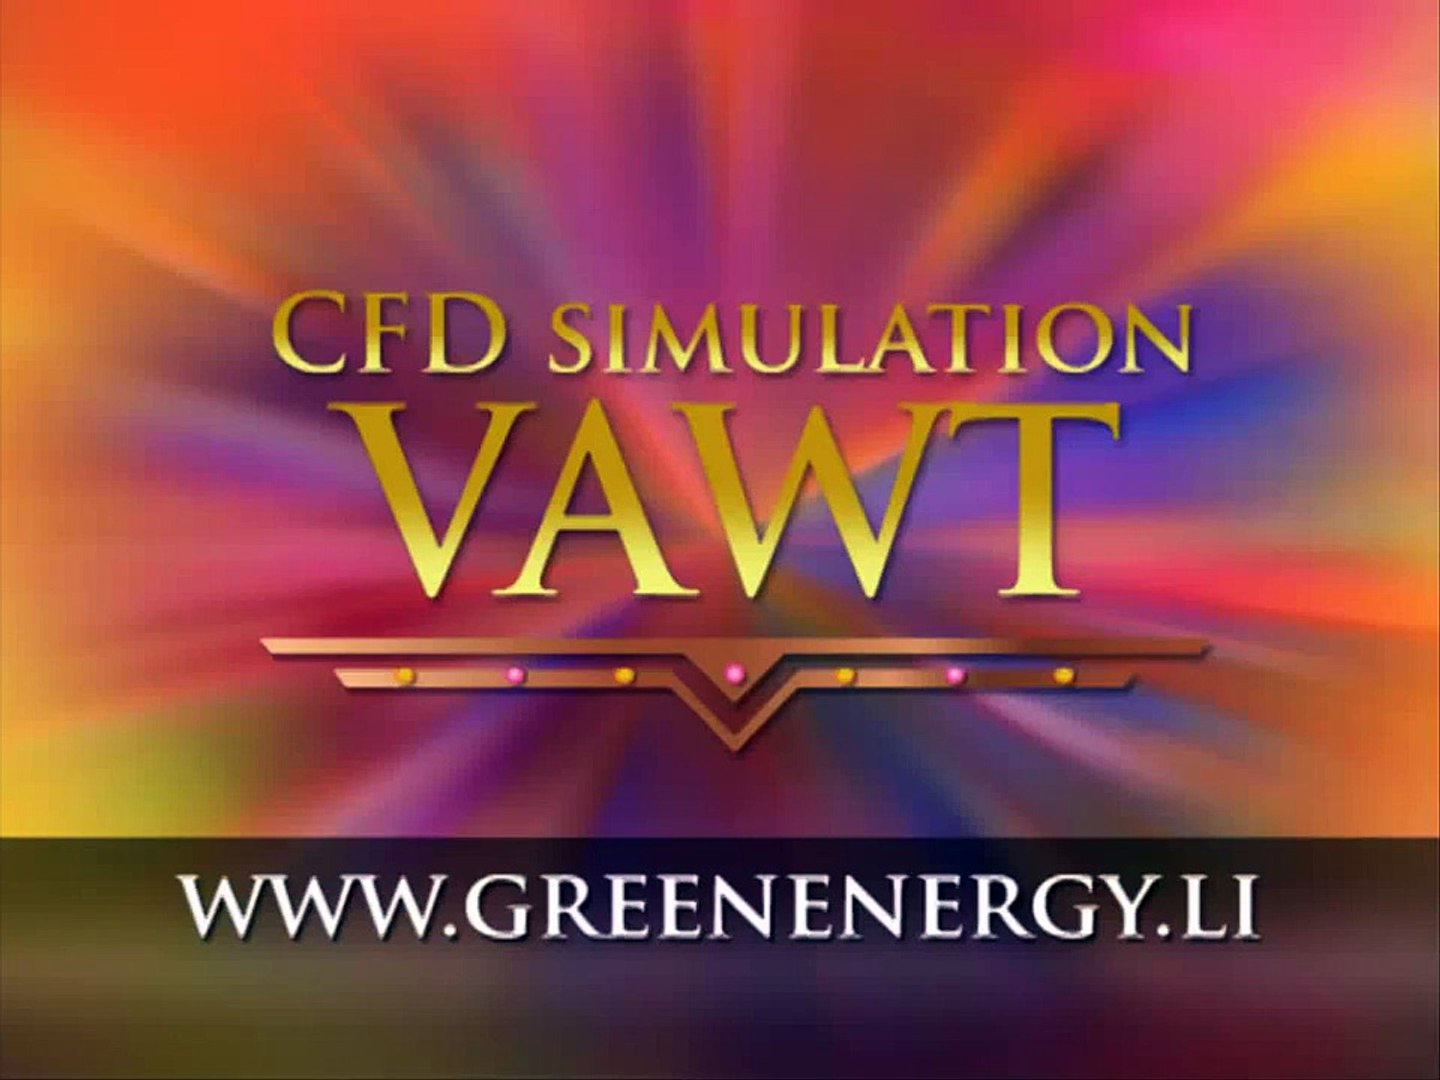 CFD simulation Greenenergy VAWT